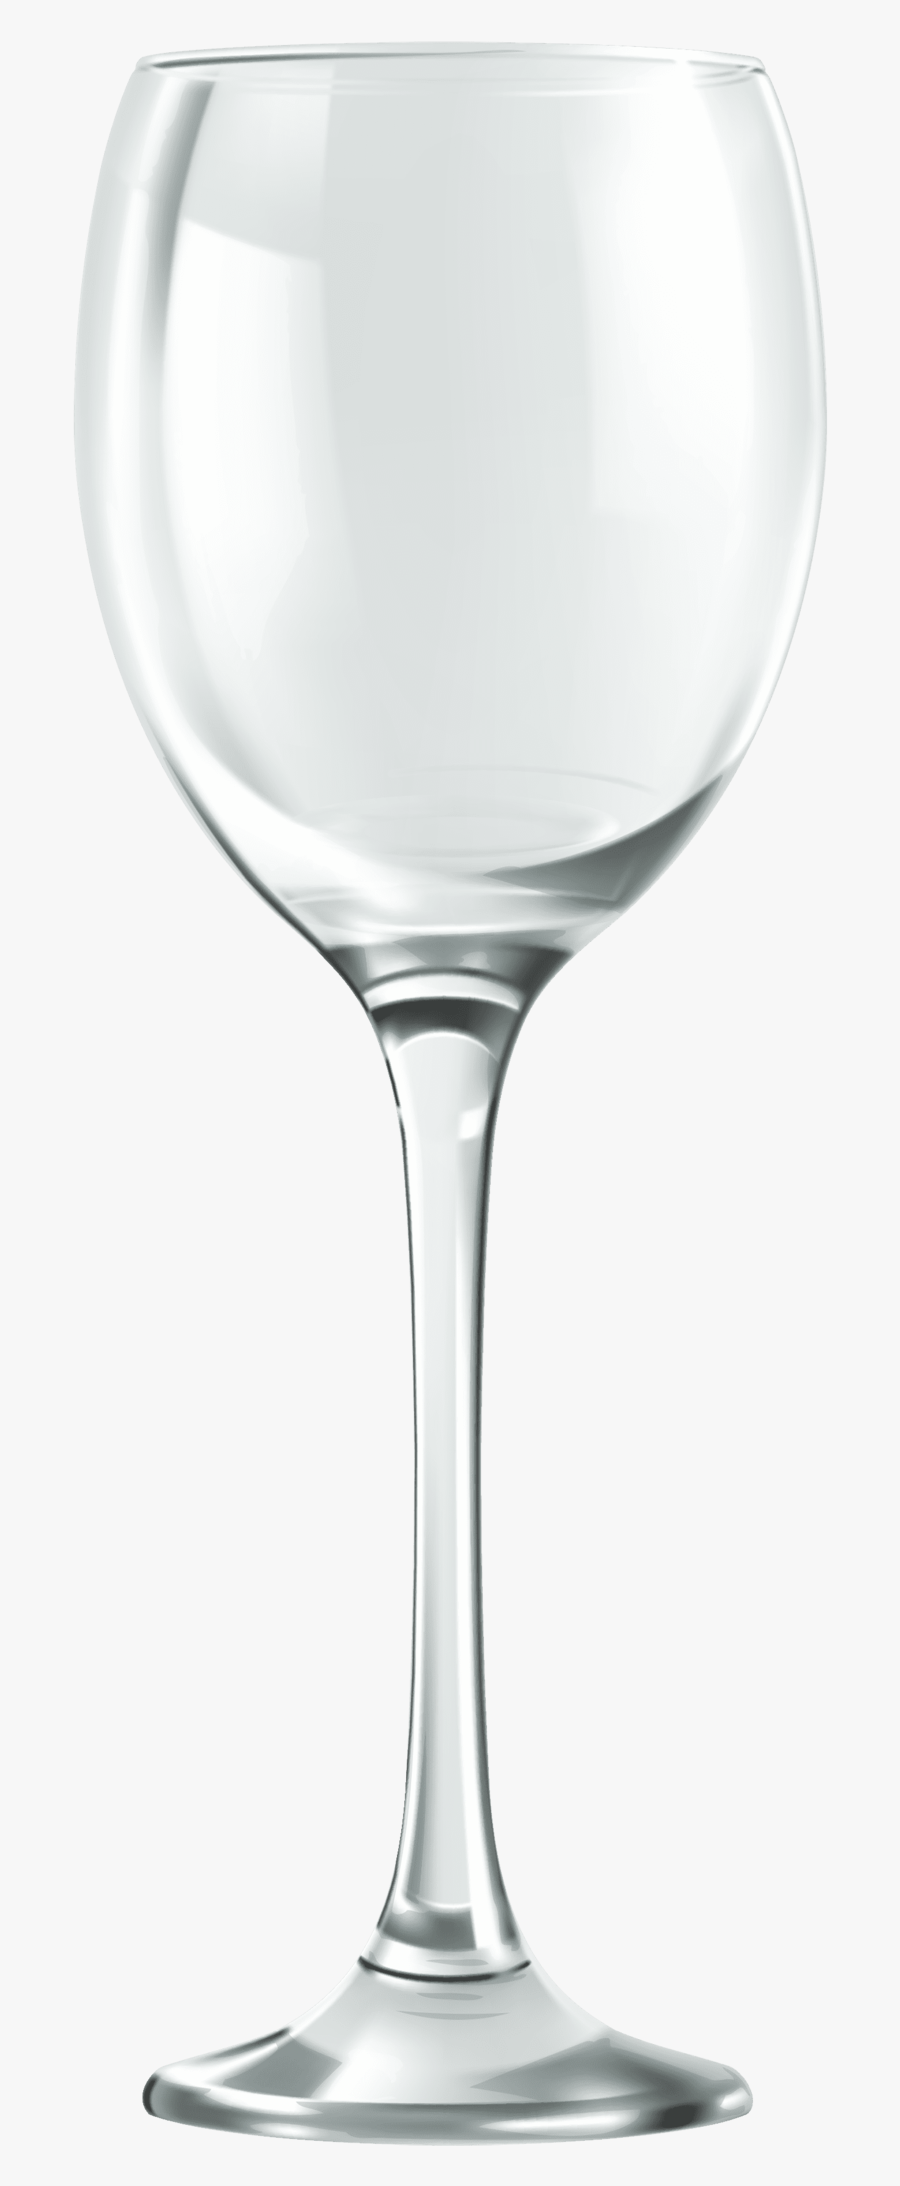 Empty Wine Glass Png, Transparent Clipart